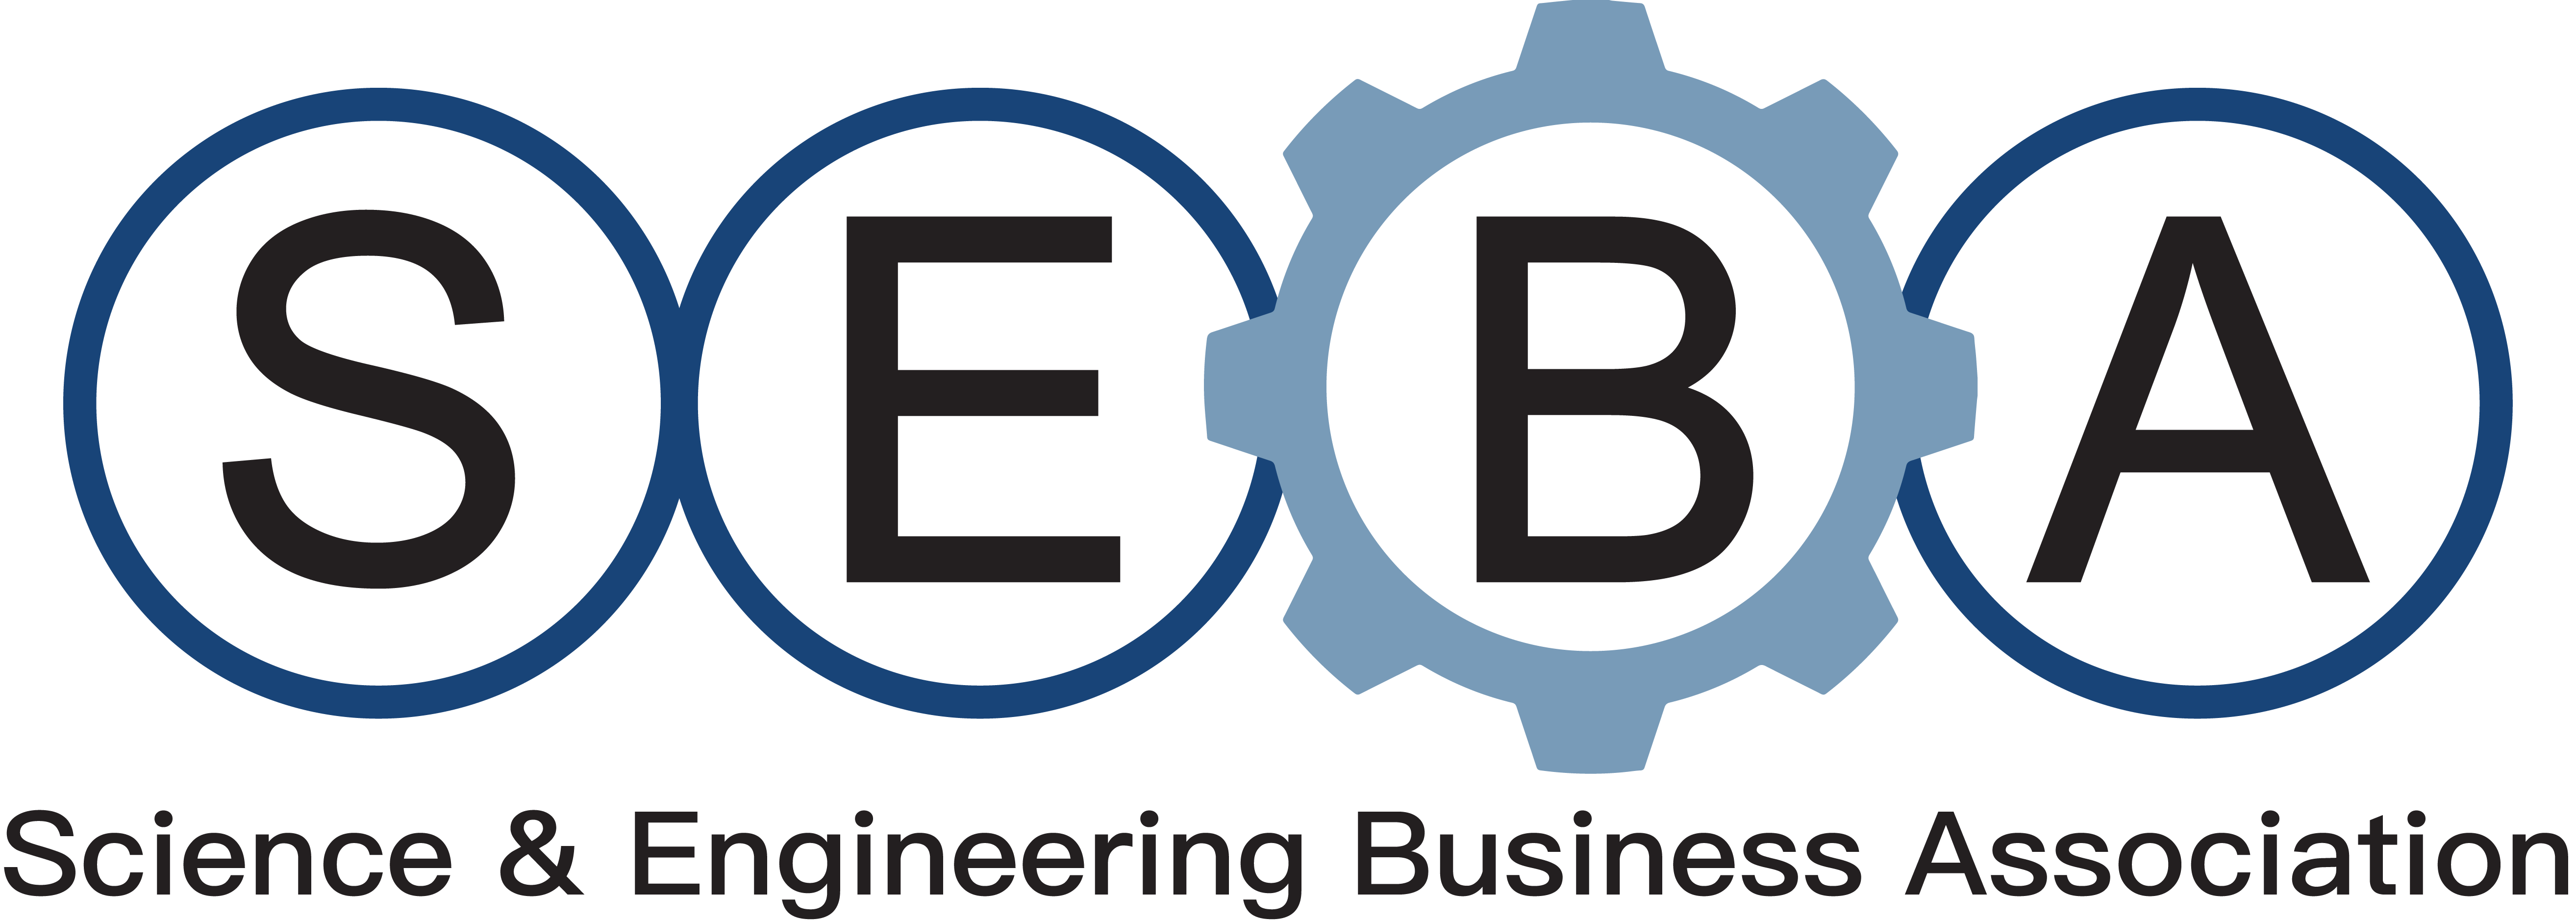 Science & Engineering Business Association logo